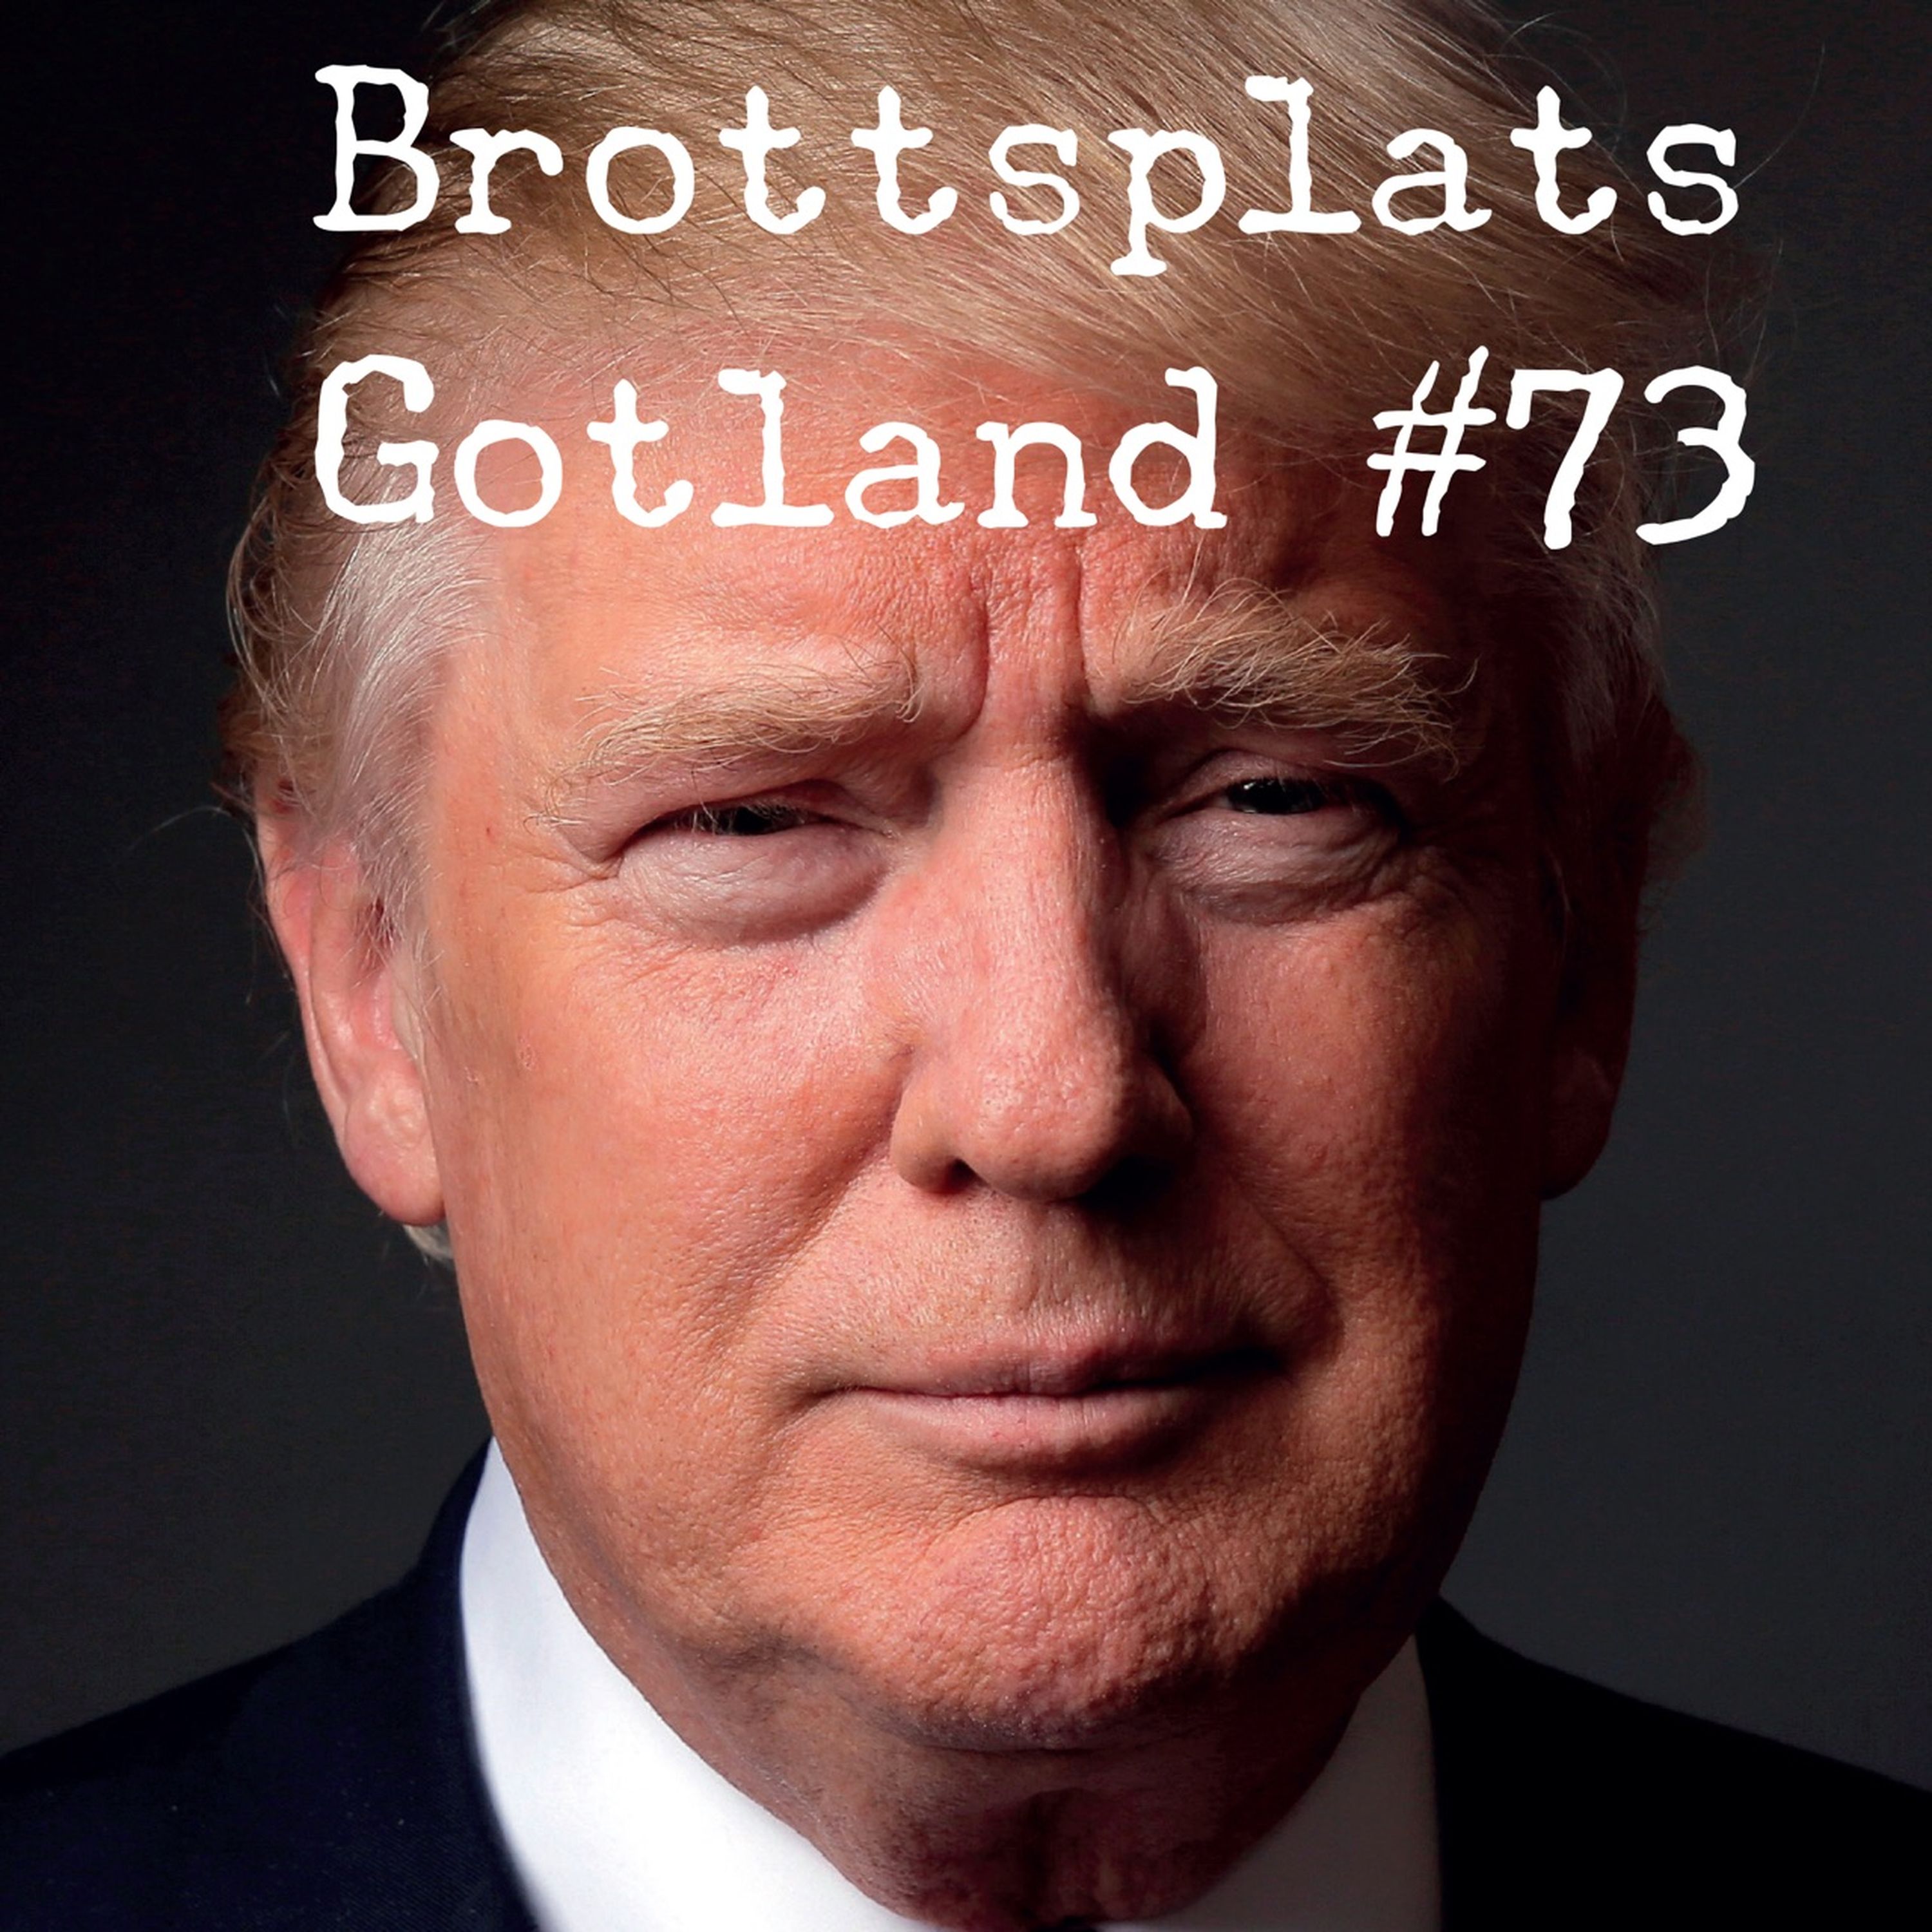 Brottsplats Gotland #73